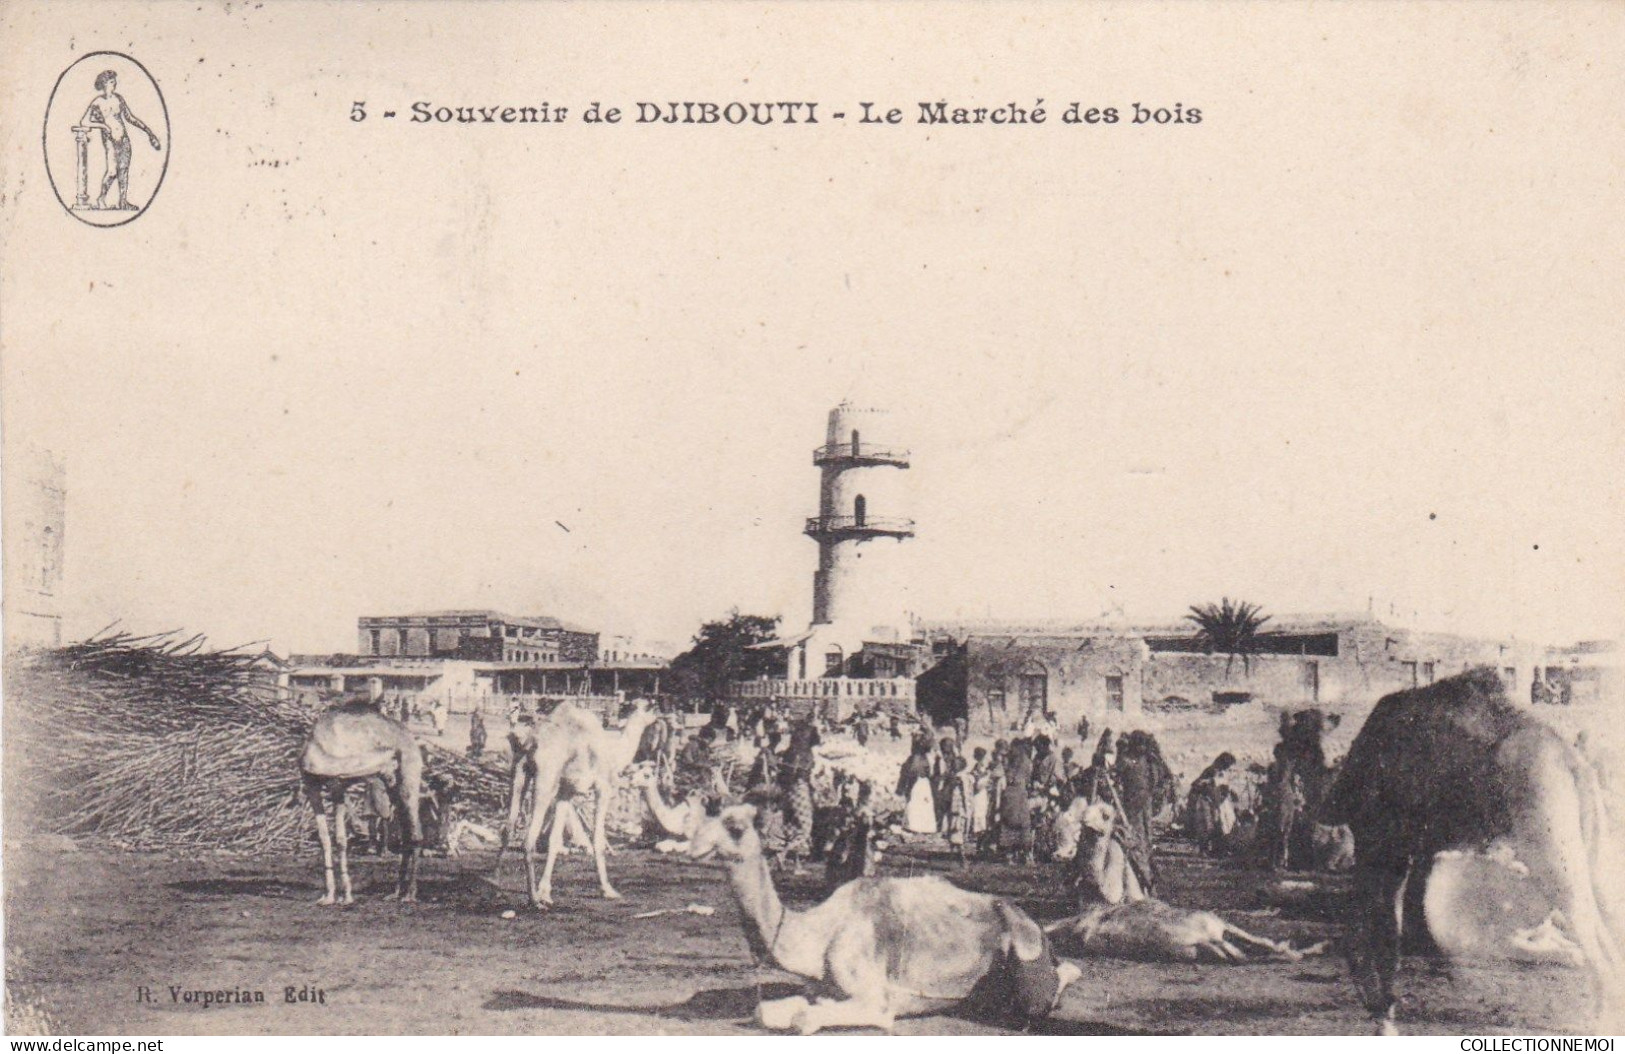 7 cartes de DJIBOUTI ,dont danse des SOMALIS